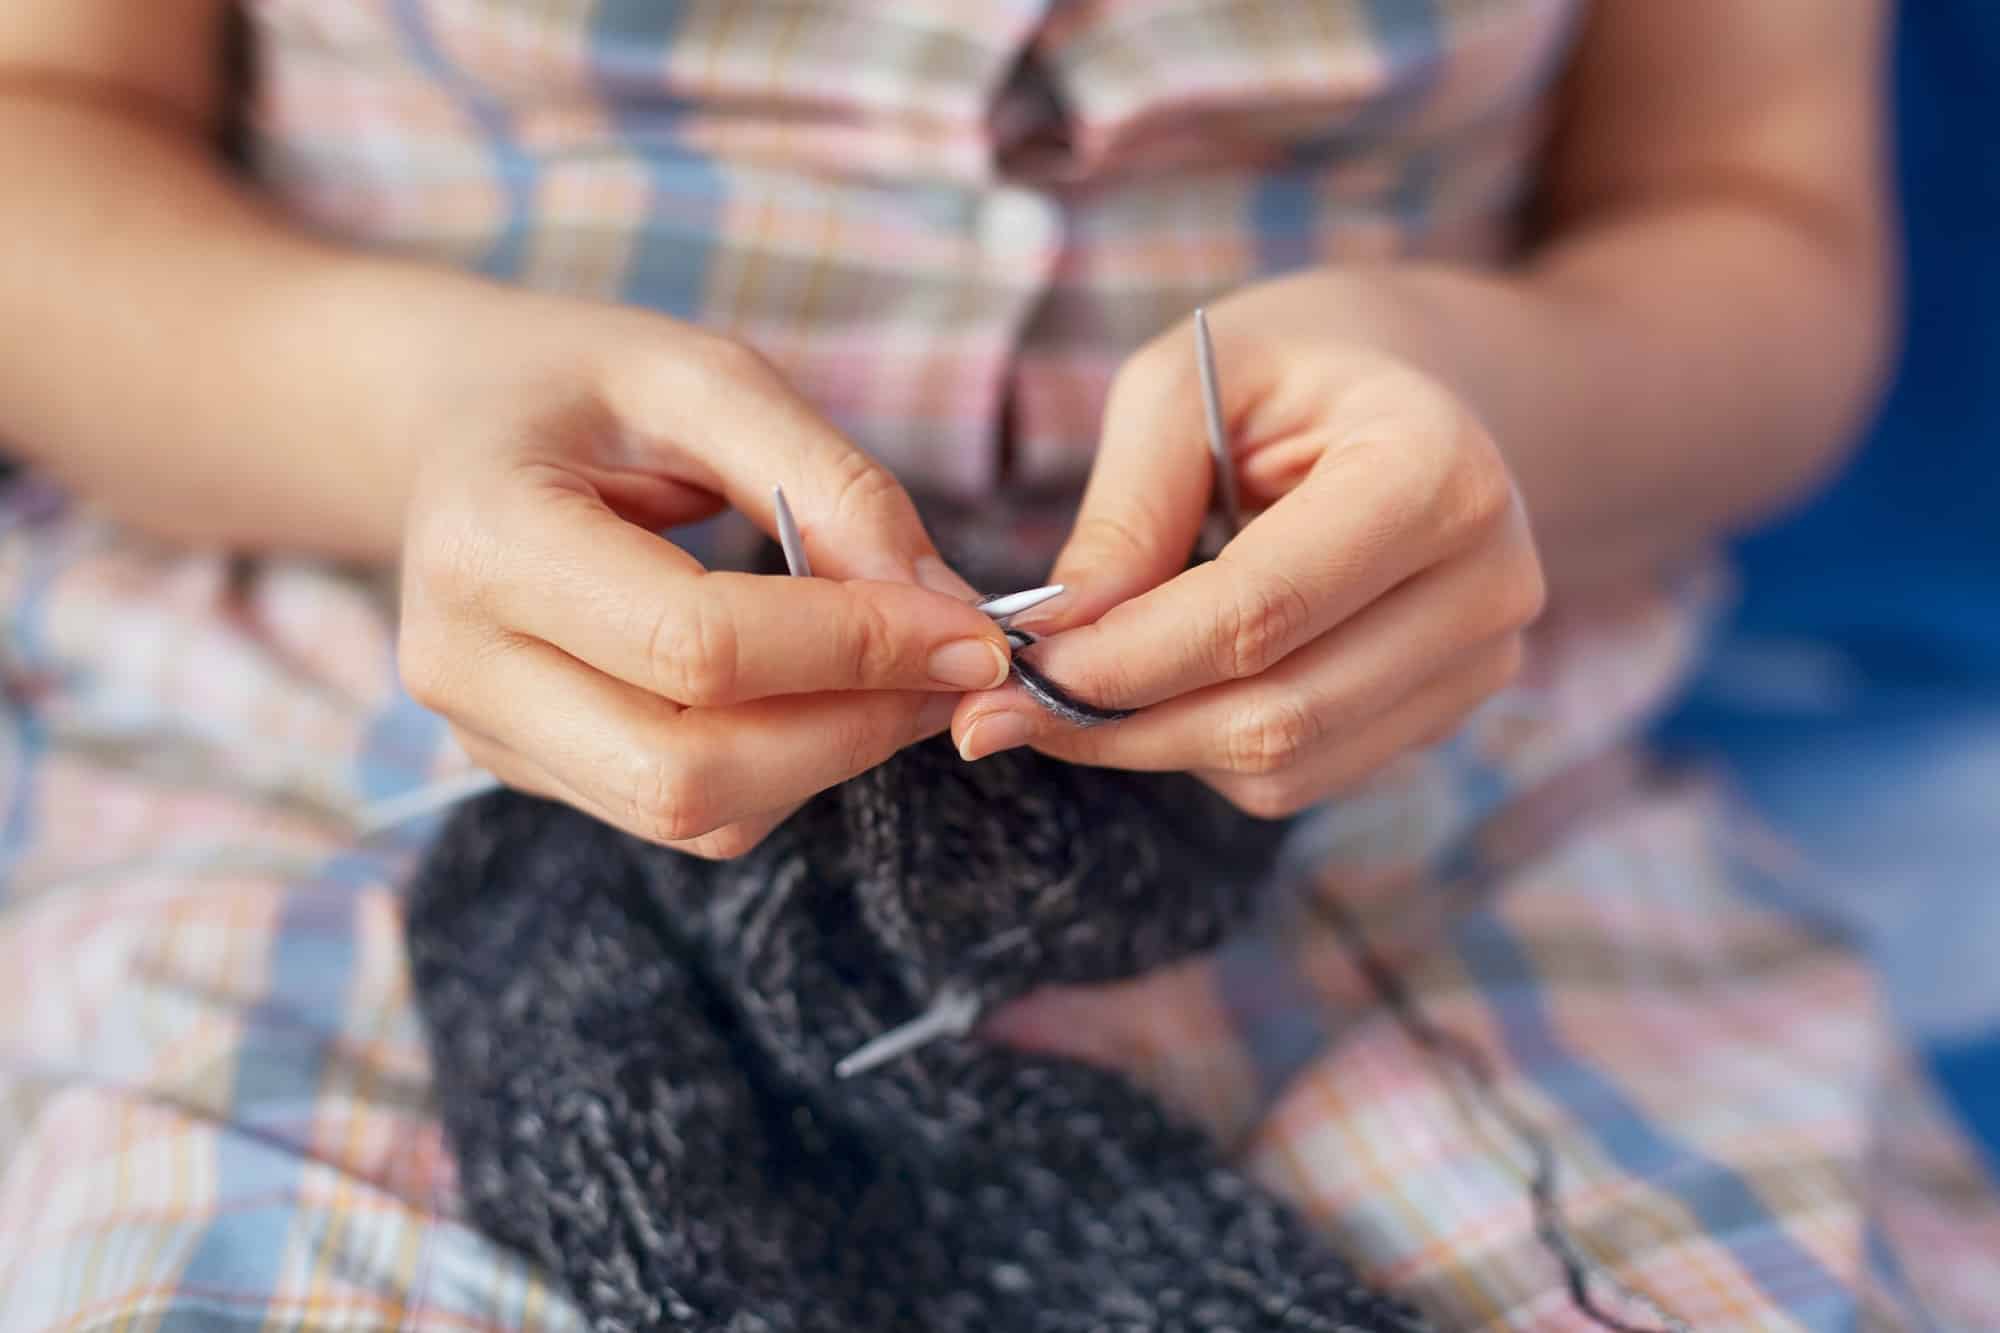 Woman knitting wool socks